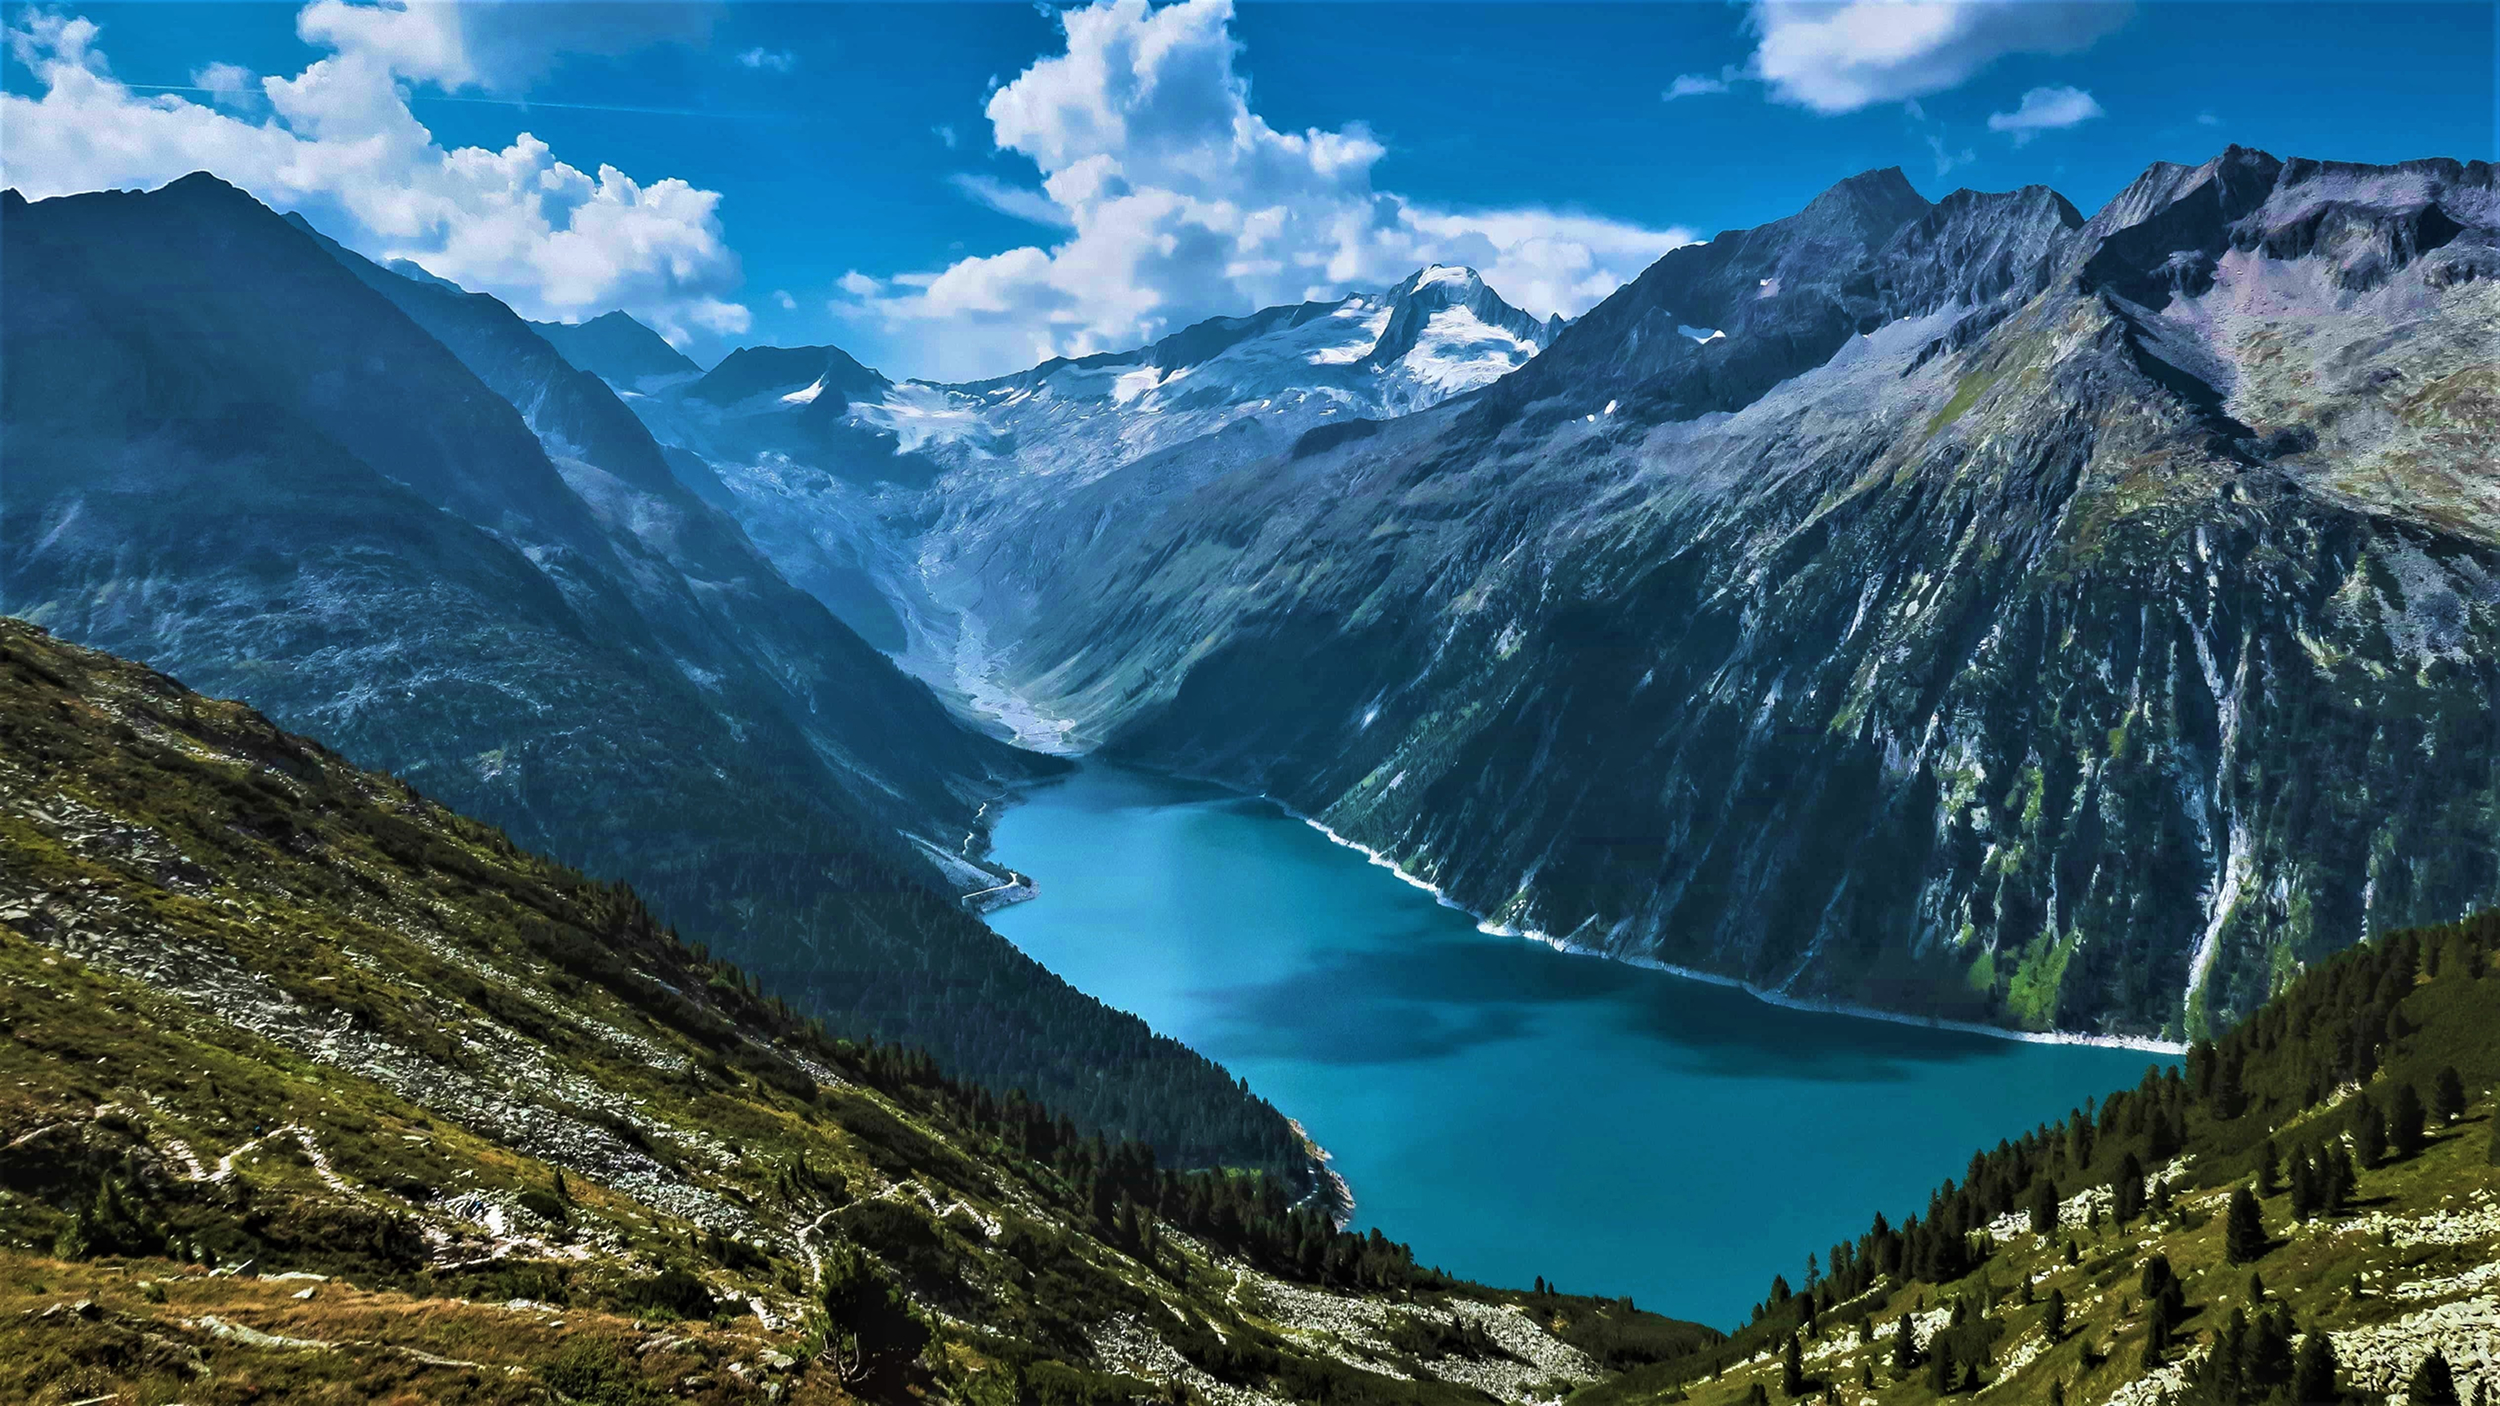 876174 descargar imagen tierra/naturaleza, fiordo, montaña, noruega: fondos de pantalla y protectores de pantalla gratis